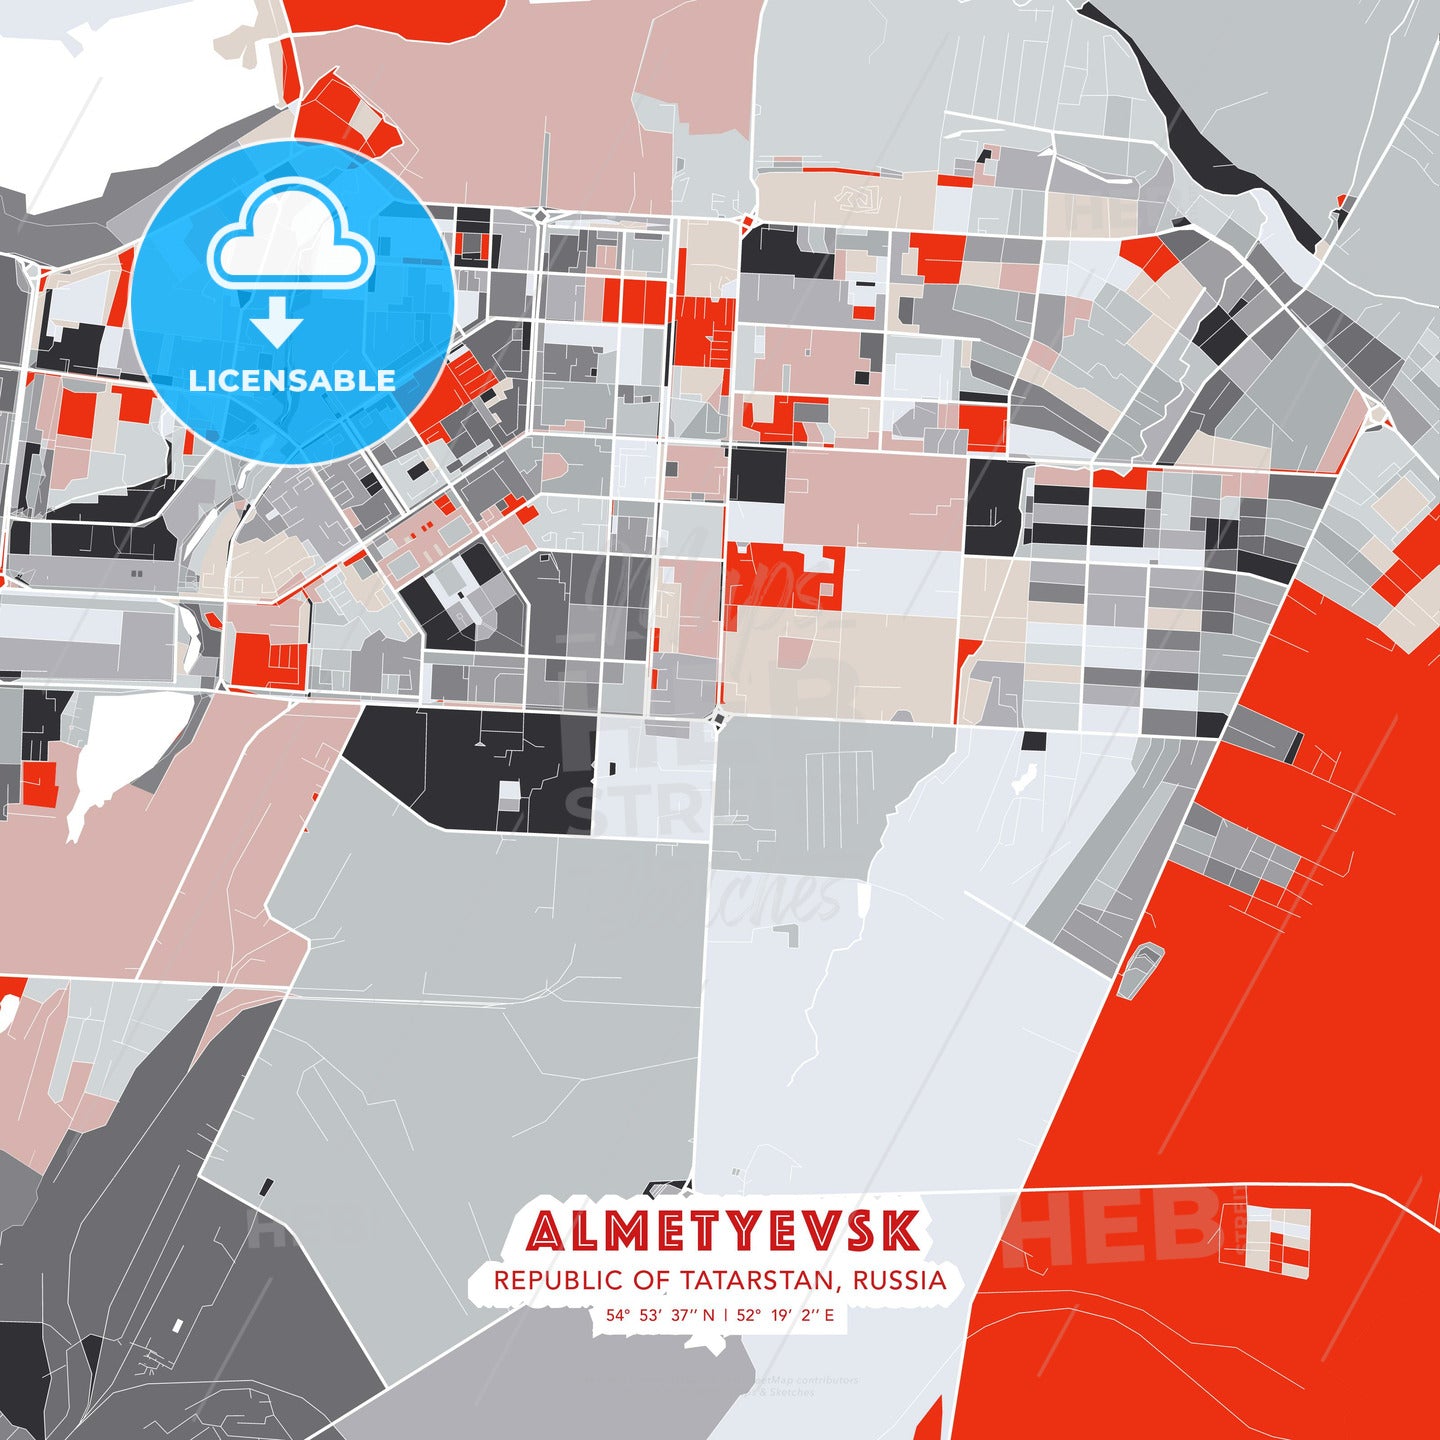 Almetyevsk, Republic of Tatarstan, Russia, modern map - HEBSTREITS Sketches